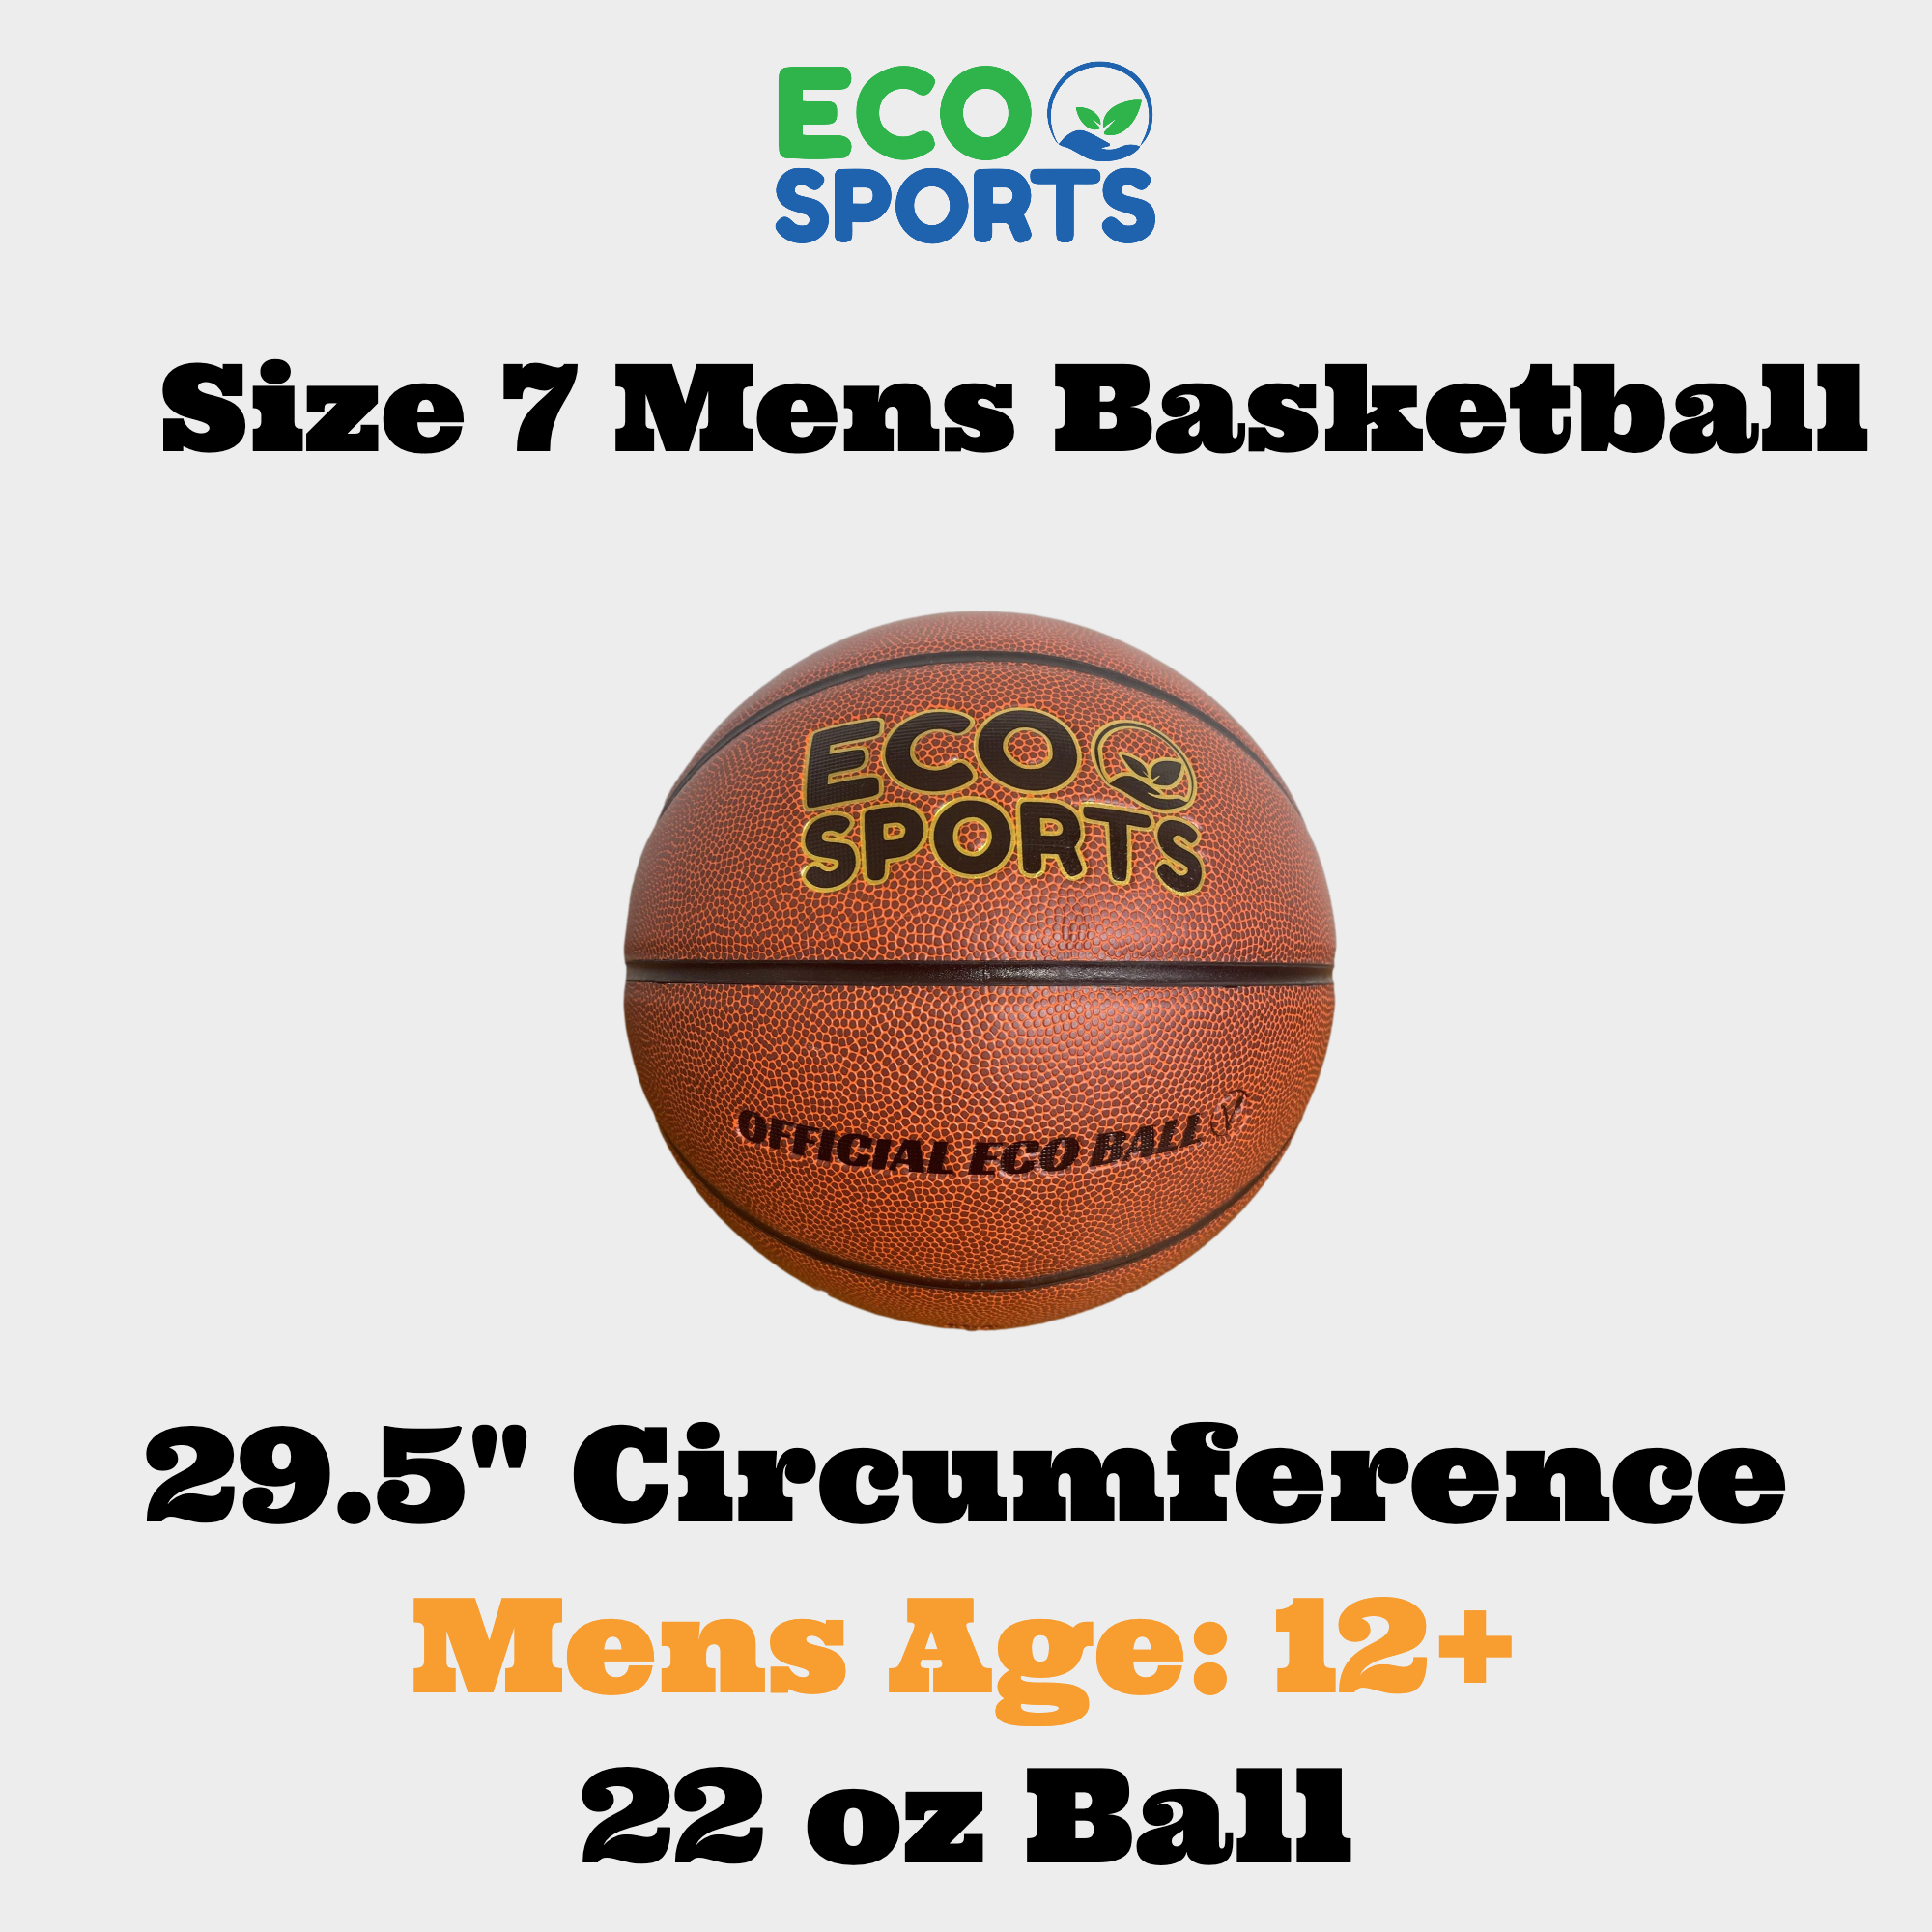 29.5" Men's Basketball - Size 7 Indoor Basketballs